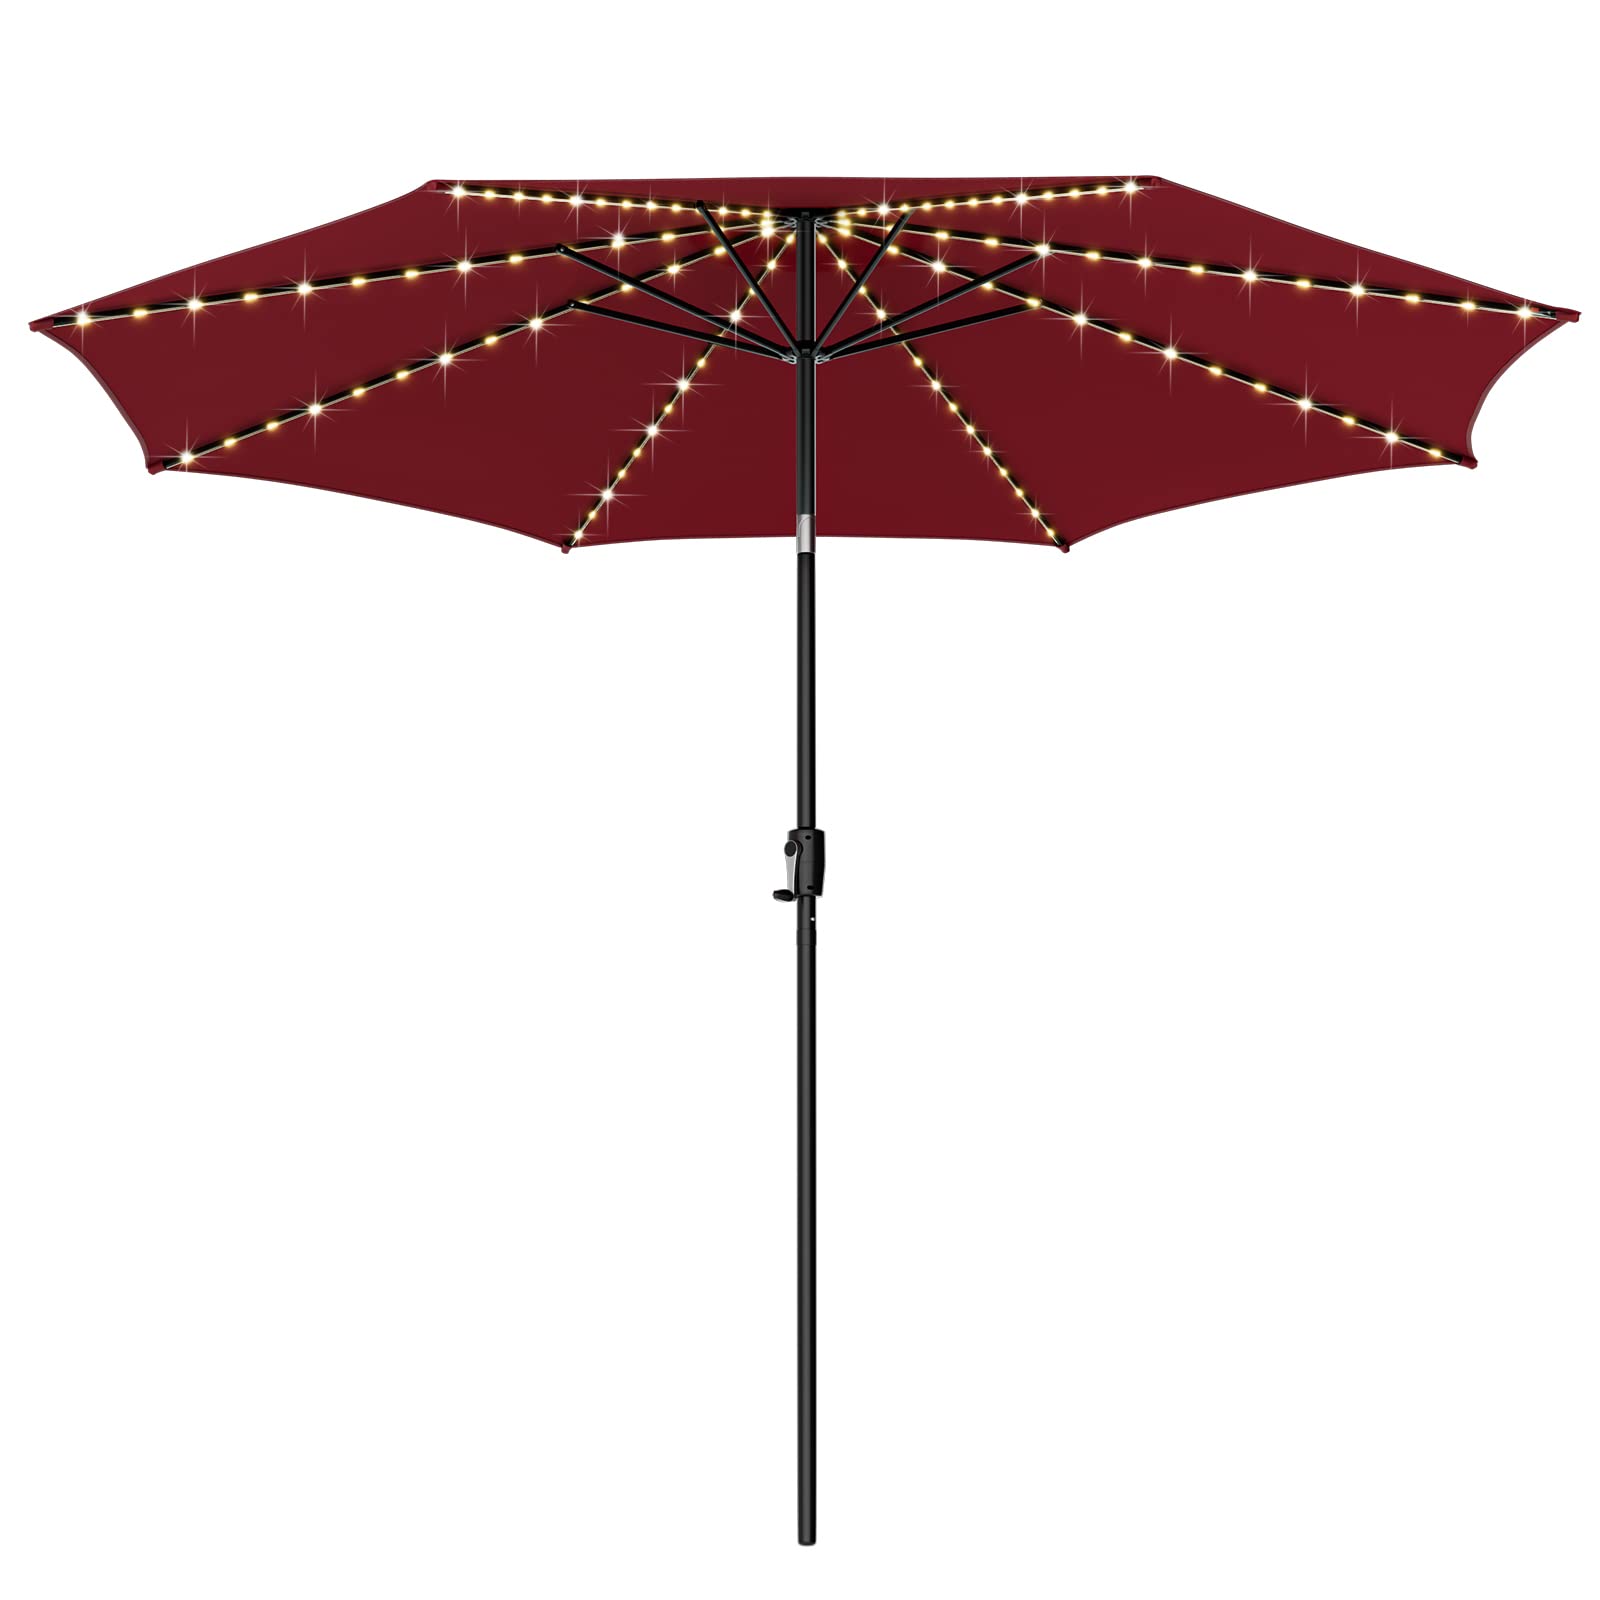 Giantex 10 ft Patio Umbrella with 112 Solar Lights, Outdoor Table Market Umbrellas with 8 Ribs